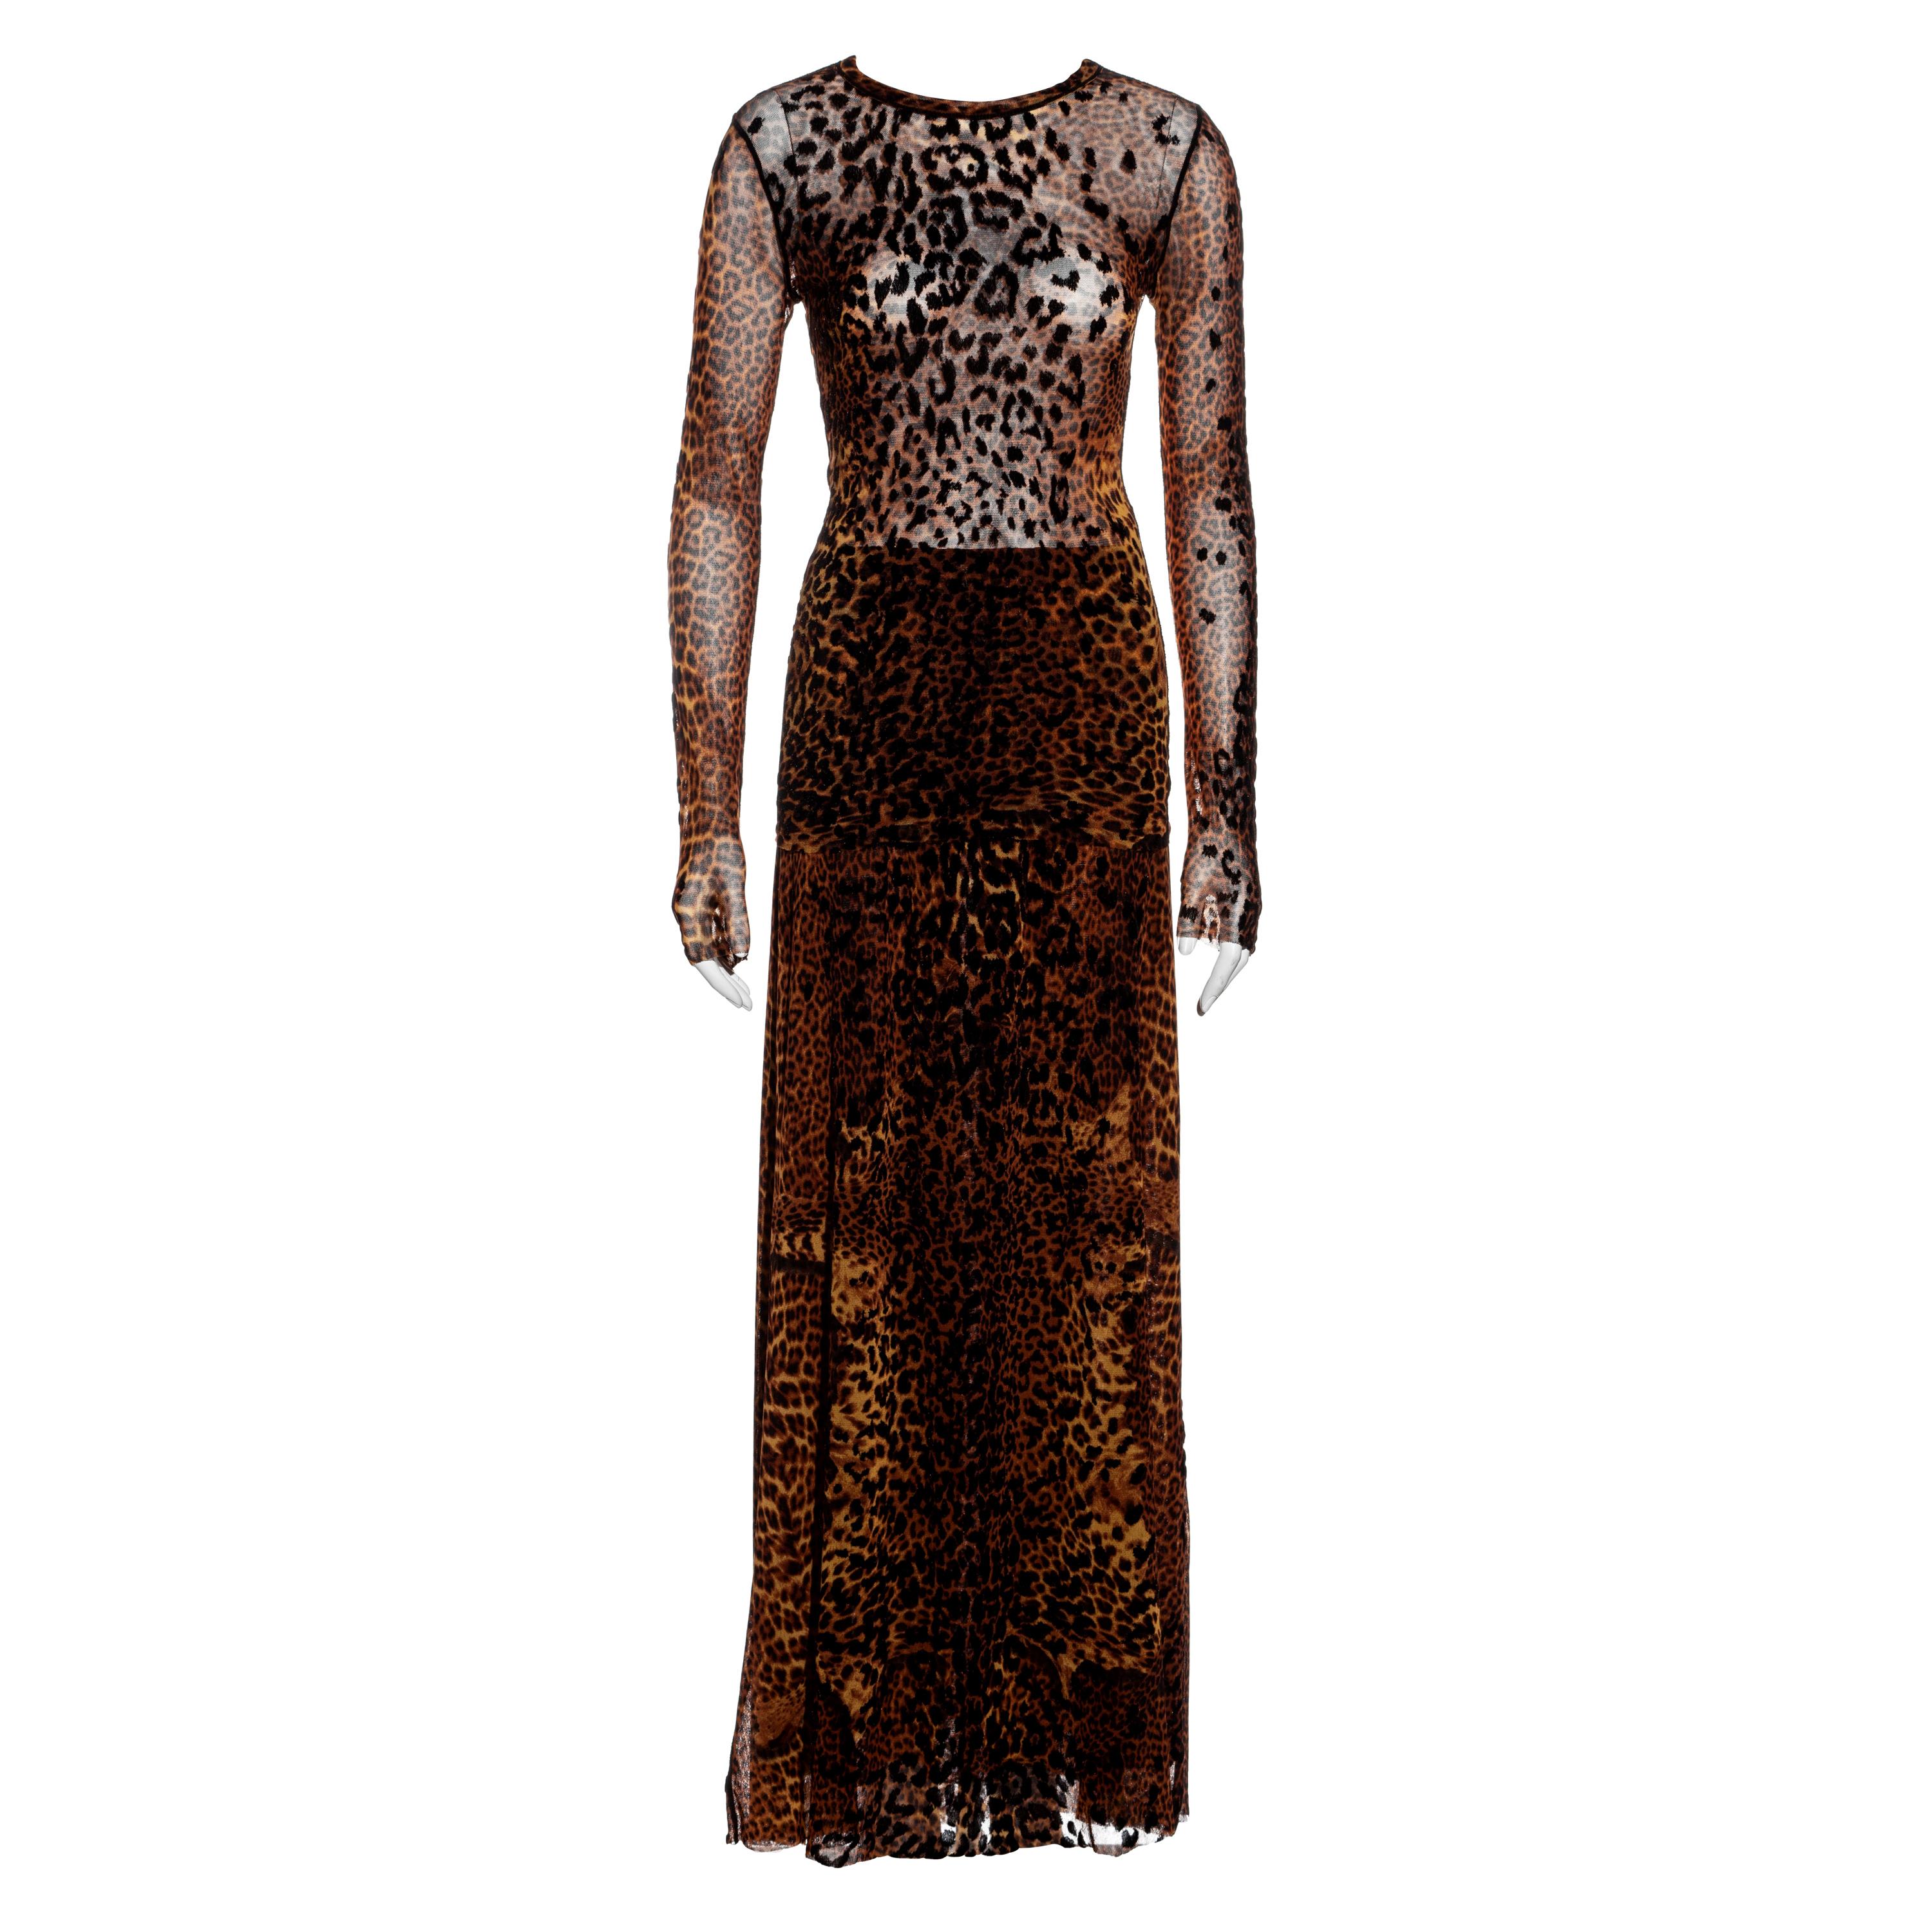 Jean Paul Gaultier leopard print mesh skirt, top and vest 3 piece set, fw 2004